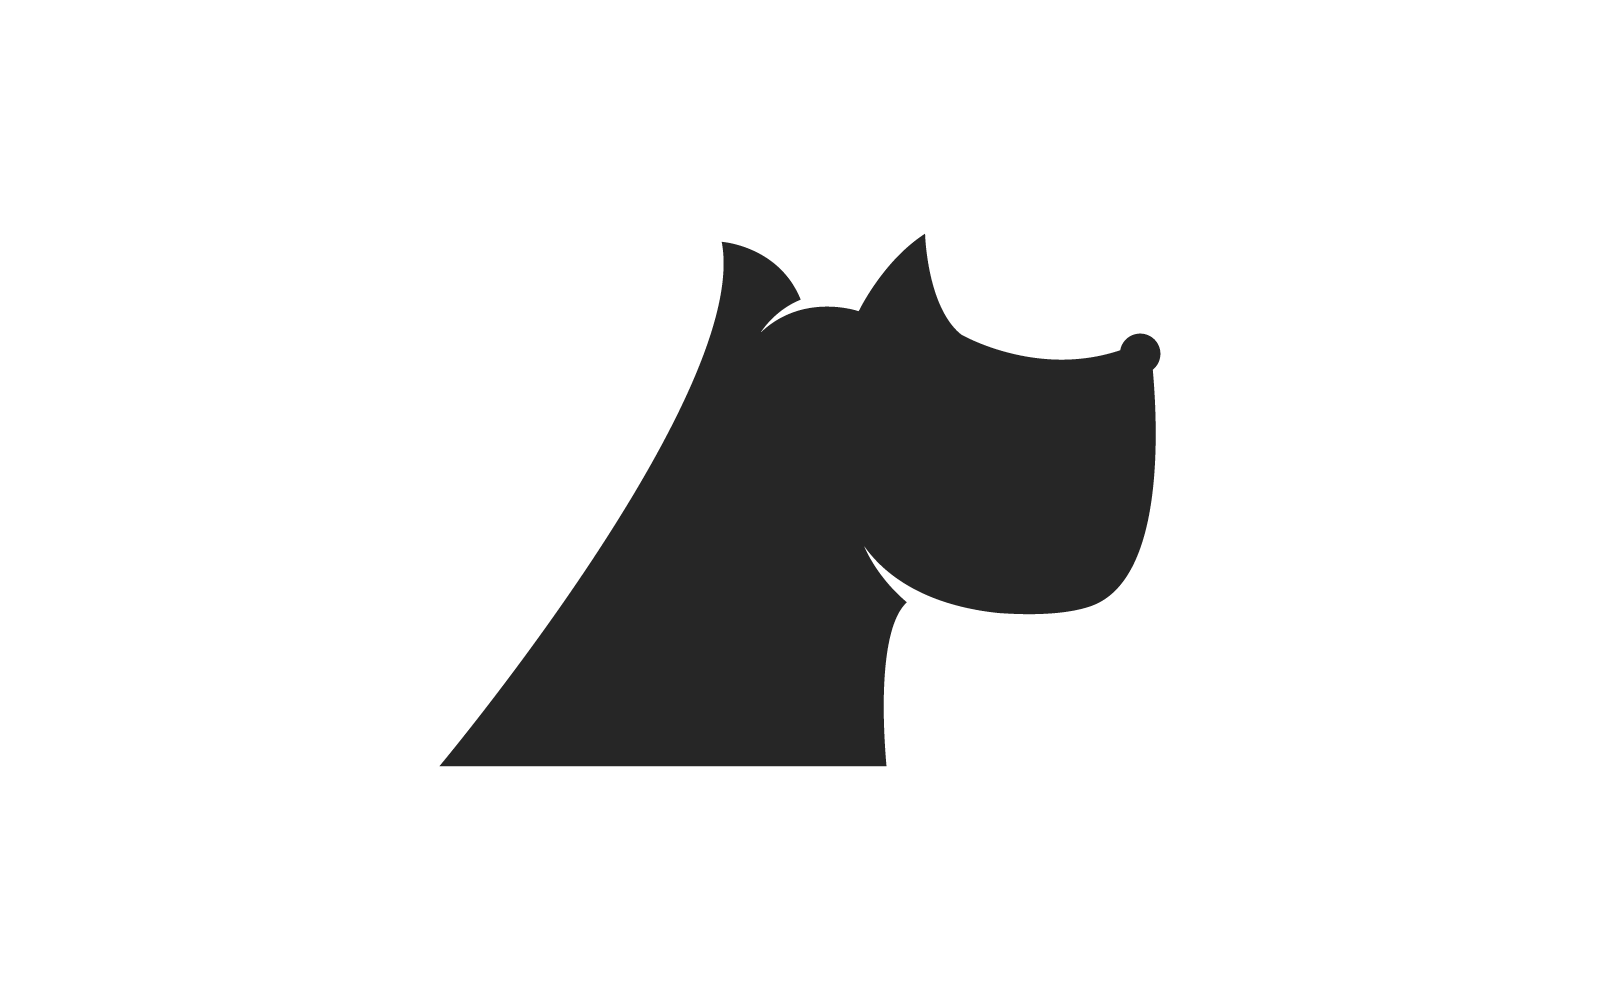 Dog head logo illustration flat design